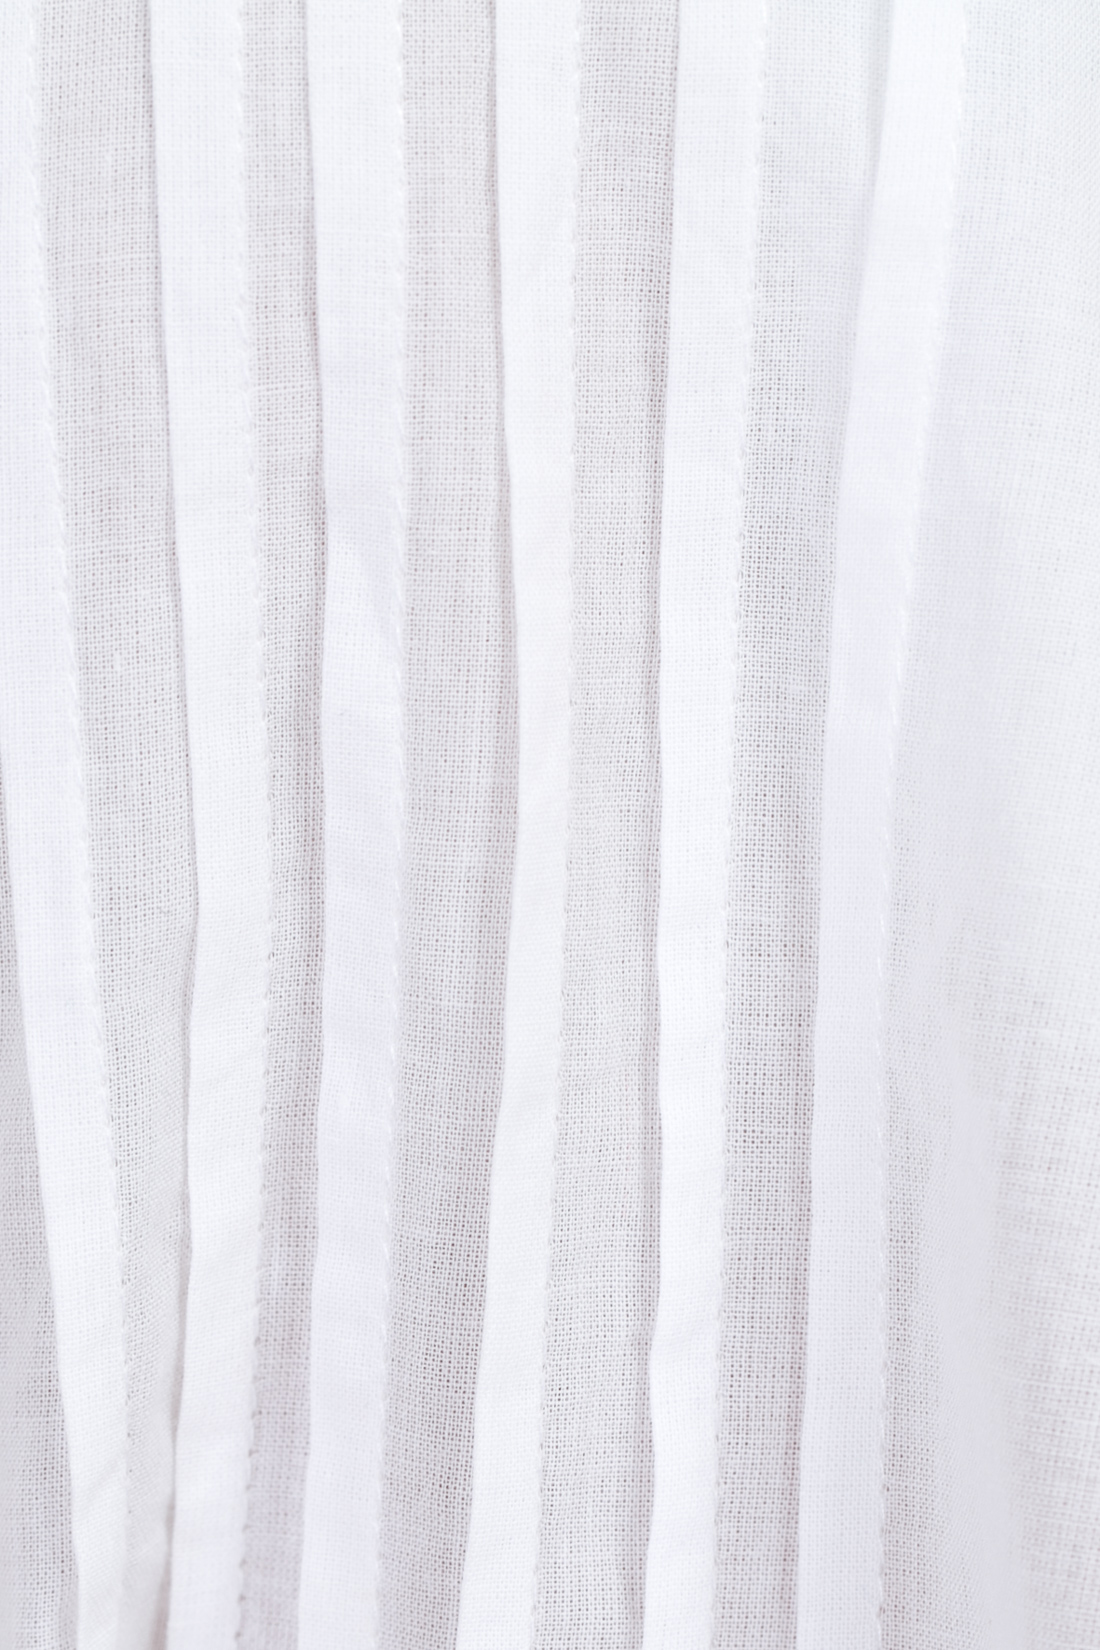 Блузка с поясом (арт. baon B197062), размер XXL, цвет белый Блузка с поясом (арт. baon B197062) - фото 4